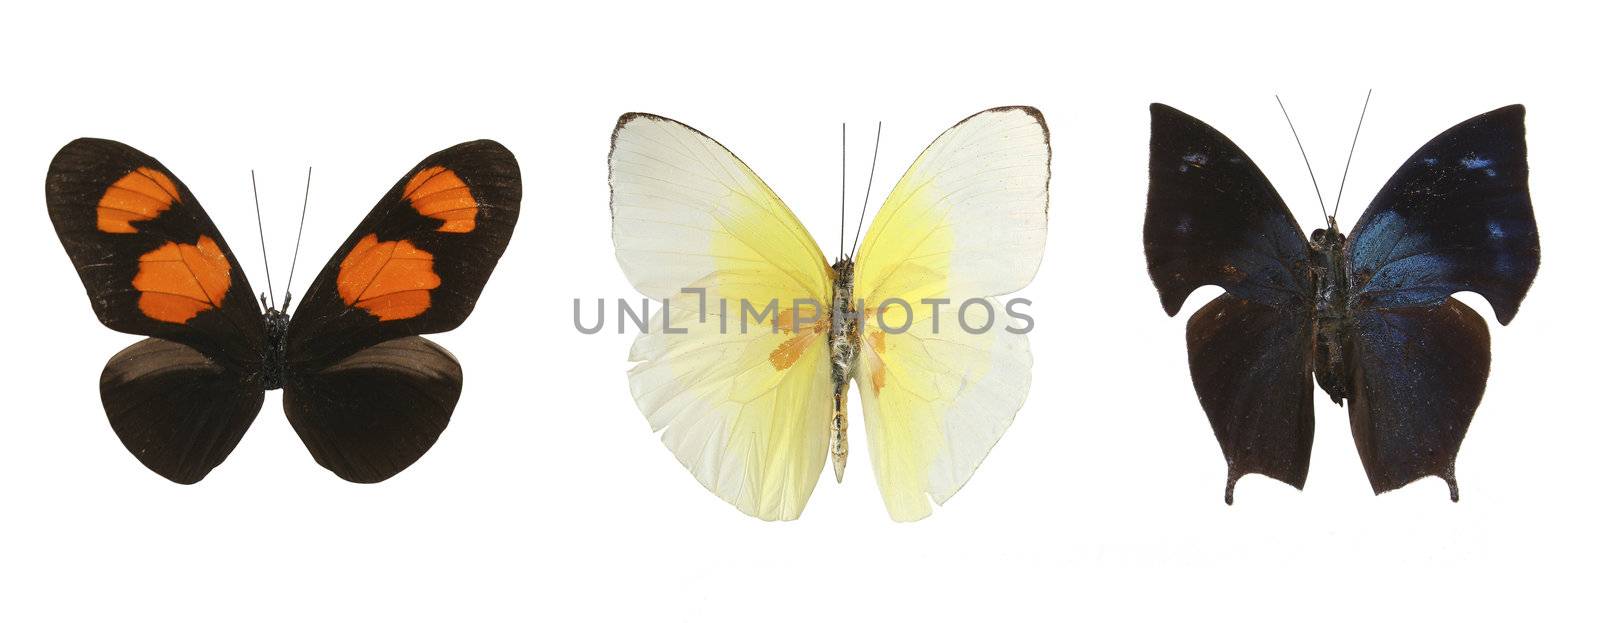 Colorful butterflies by Erdosain